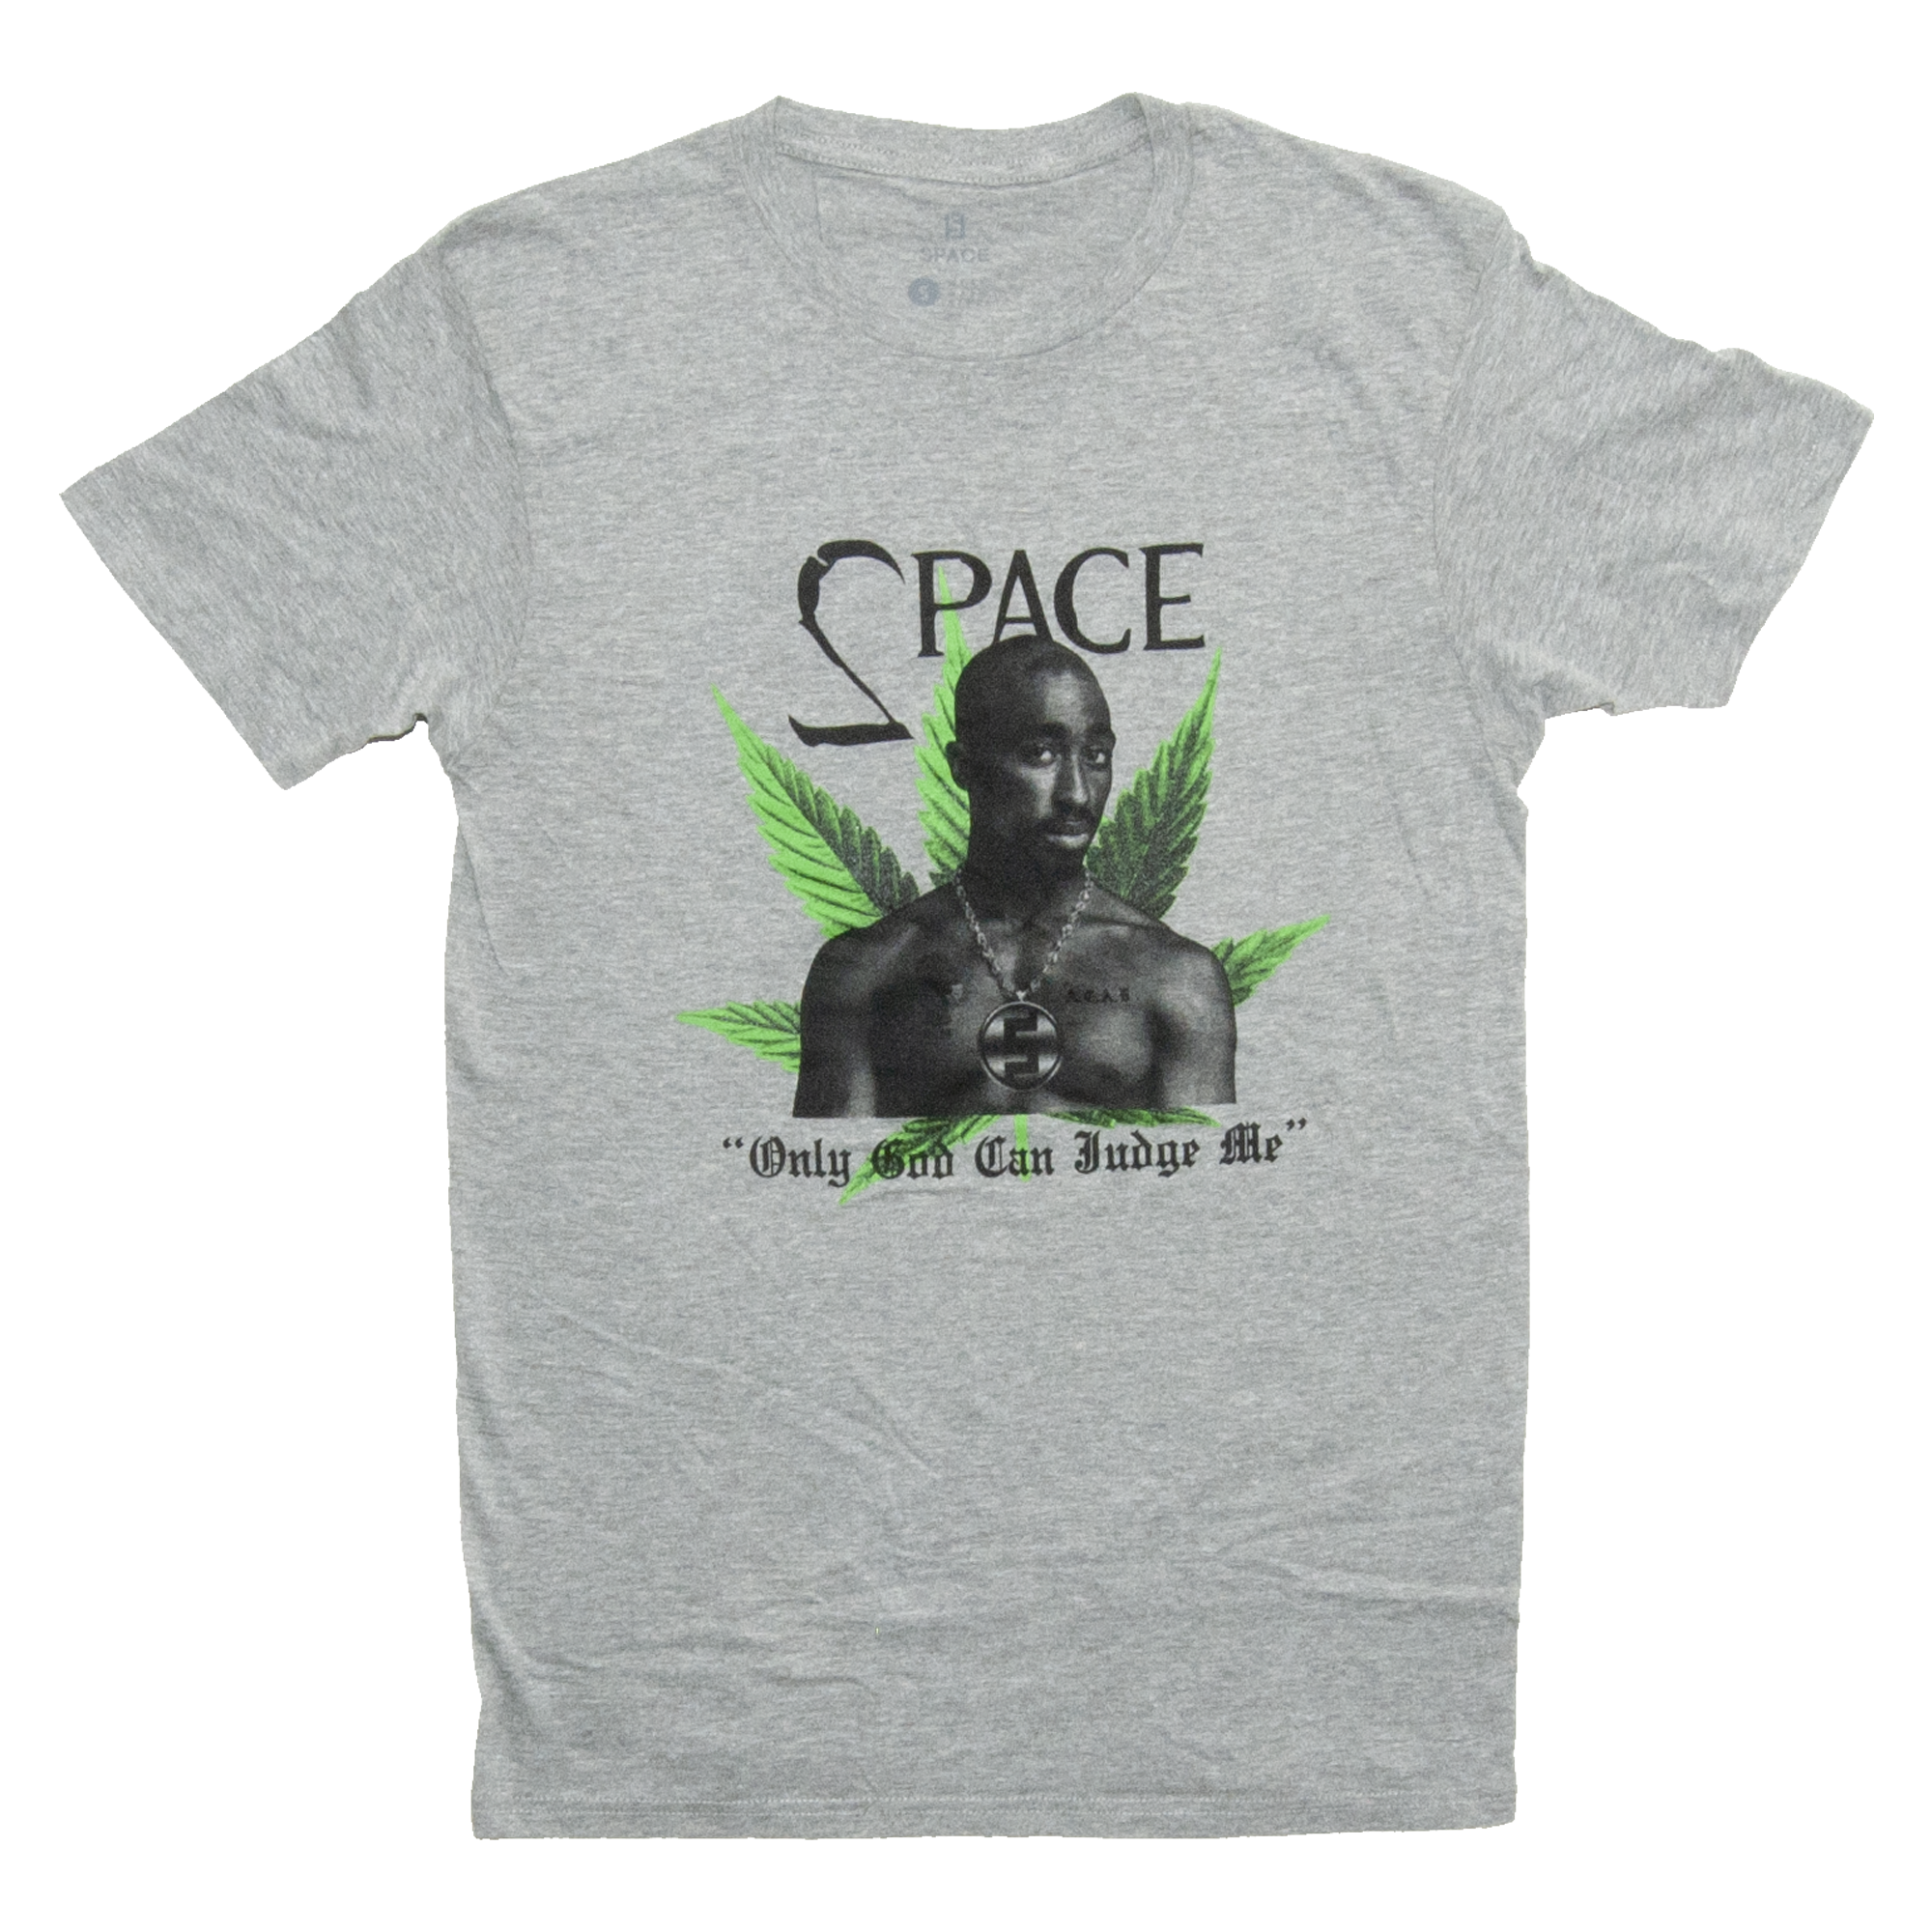 Space Pac Tee -  Heather Grey